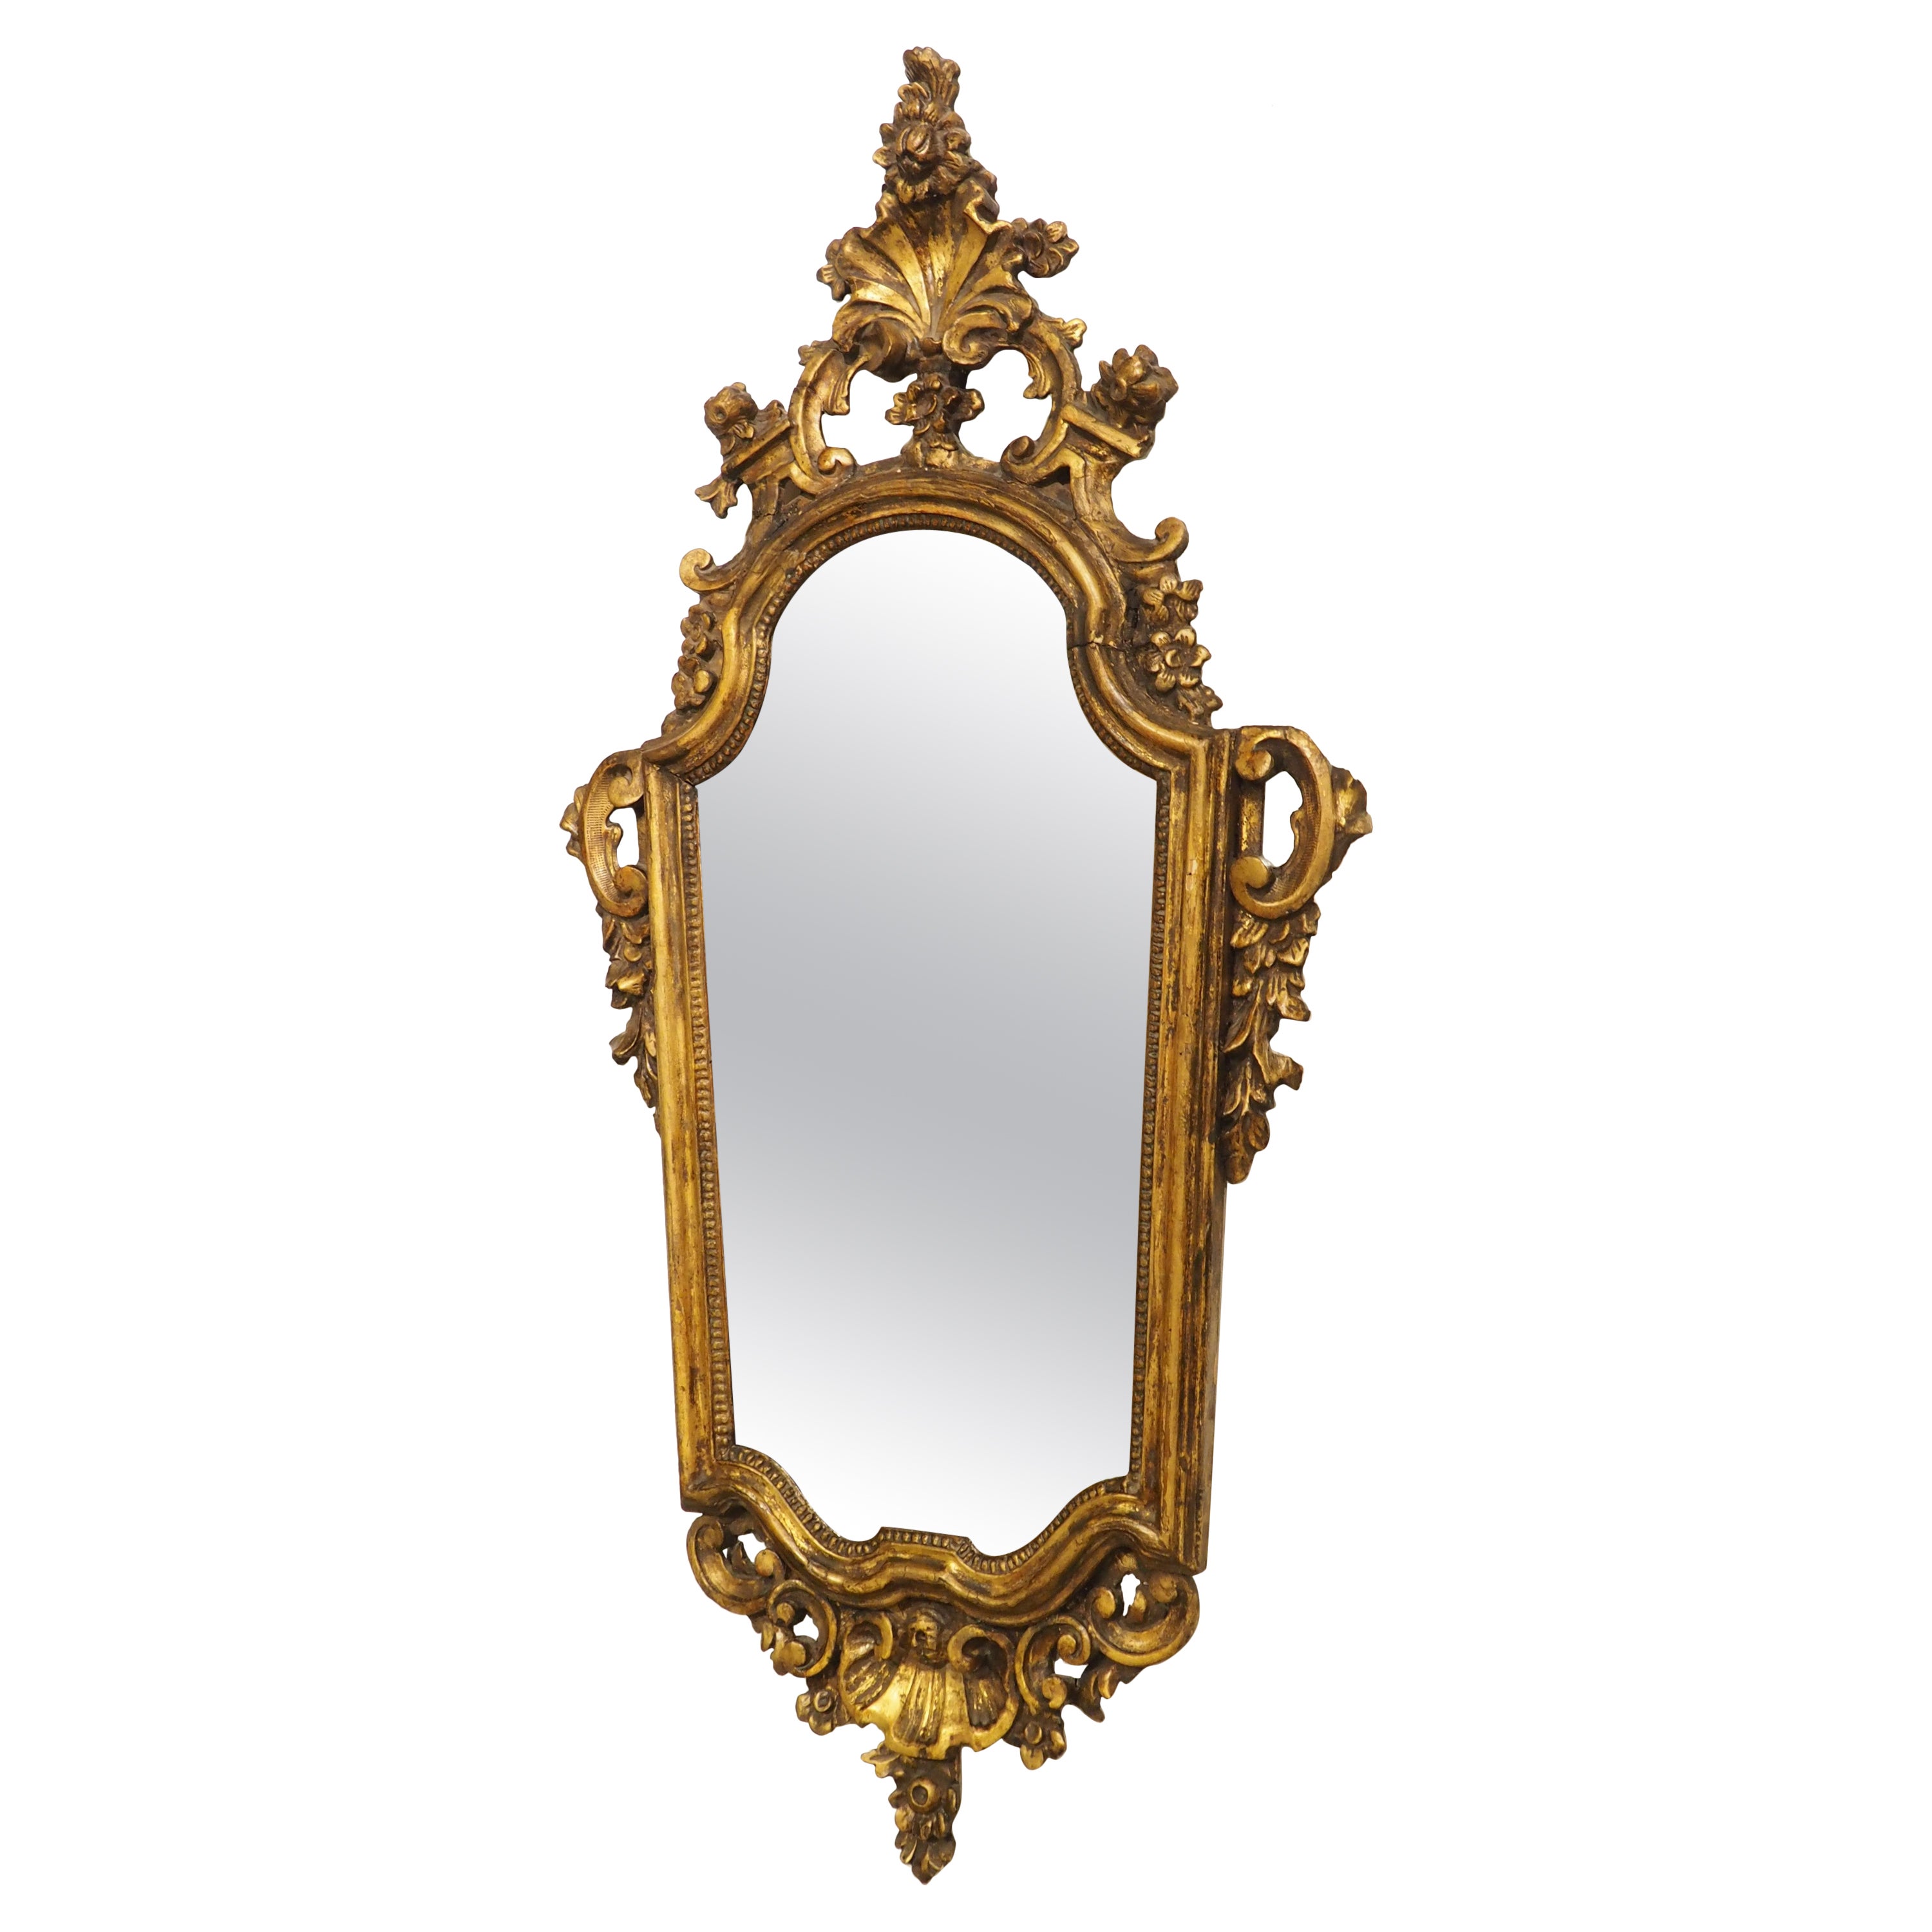 Antique Italian Giltwood Mirror, Venice, 19th century